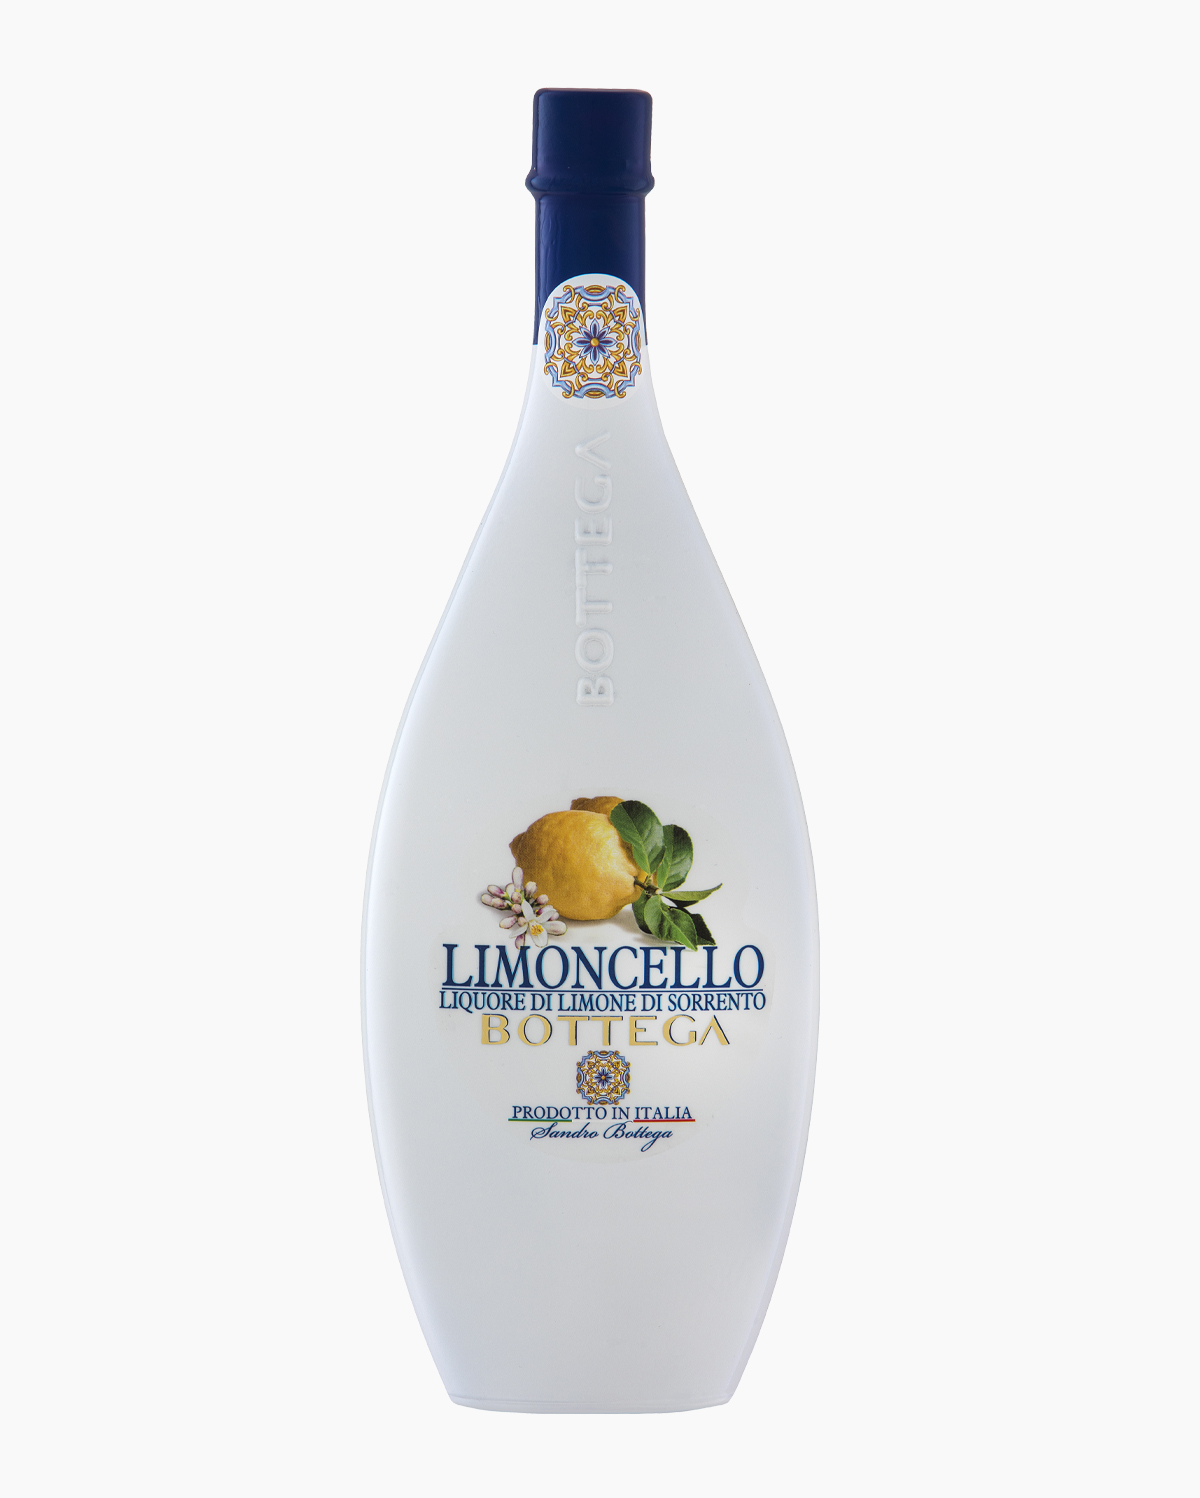 Limoncello di Capri Lemon liqueur